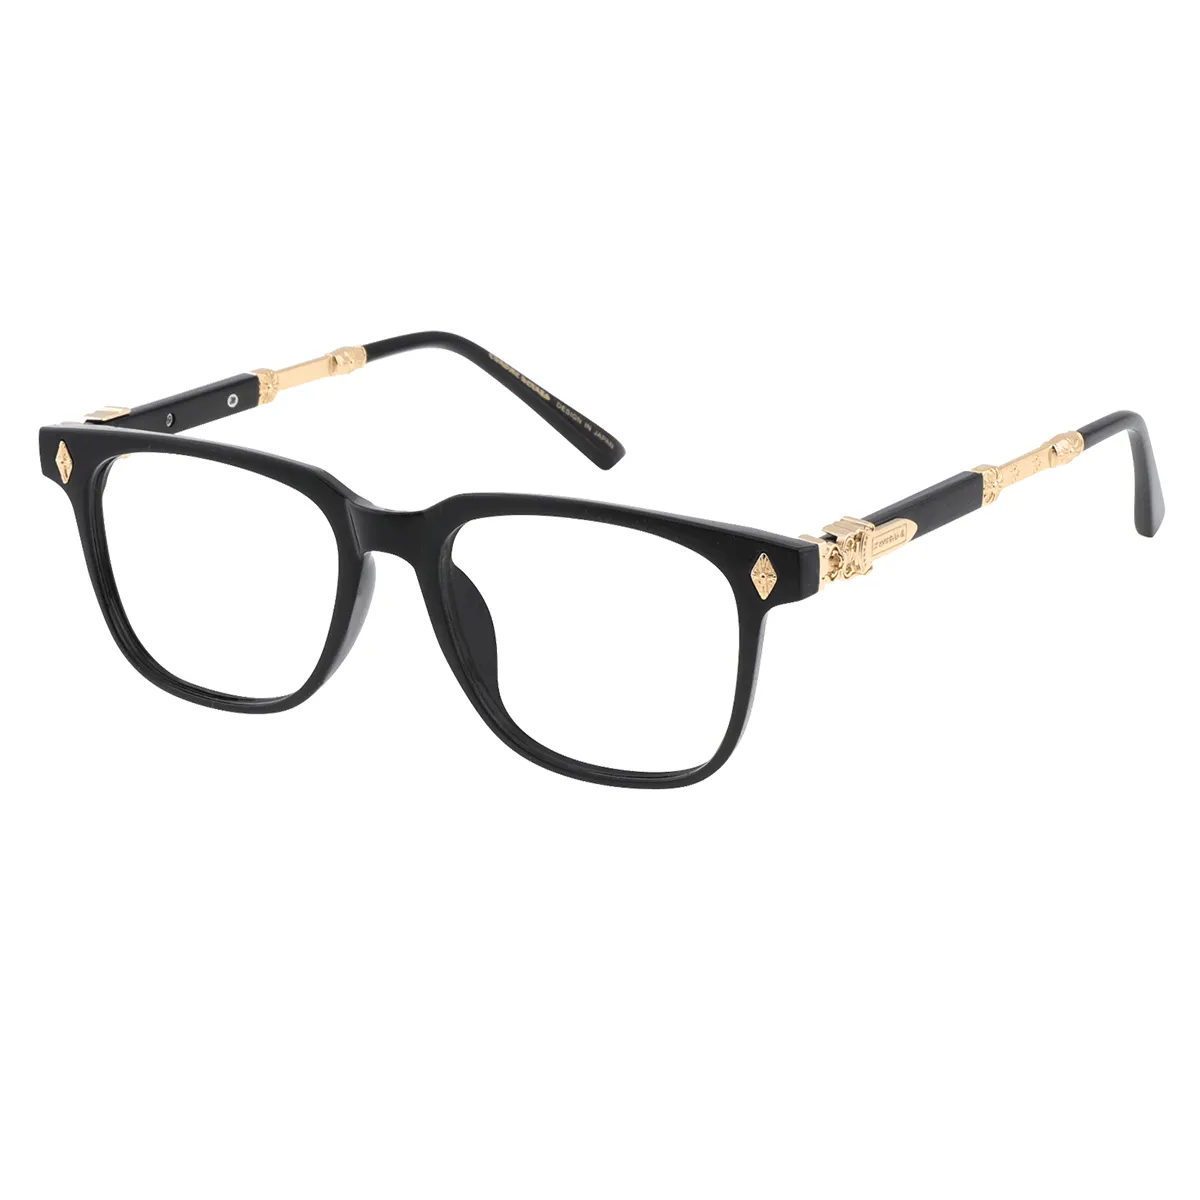 Todd - Square Black/Gold Glasses for Men